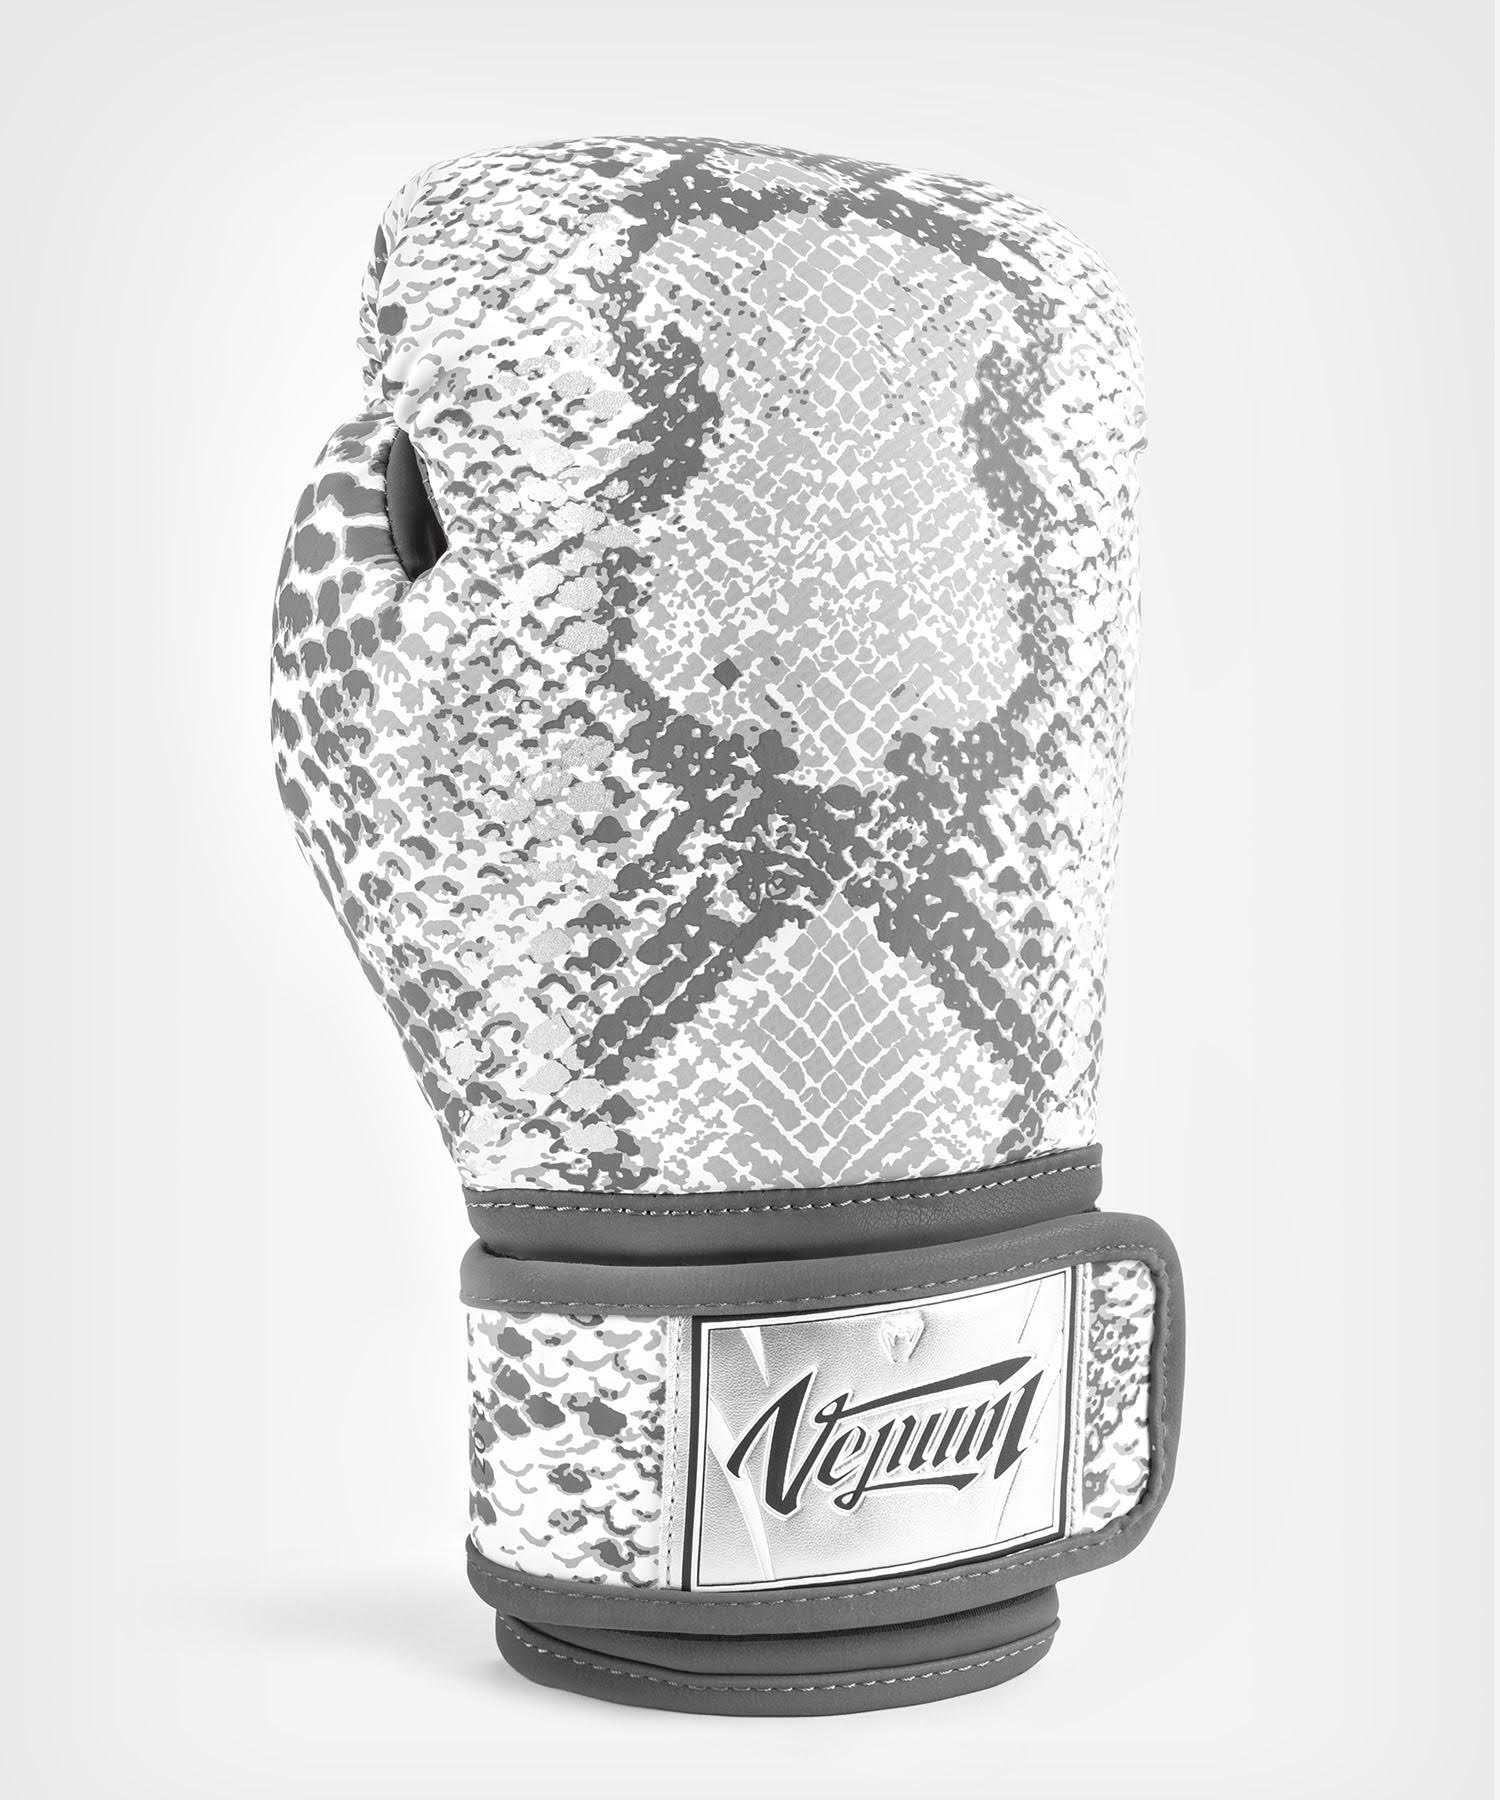 Venum White Snake ボクシンググローブ - ホワイト